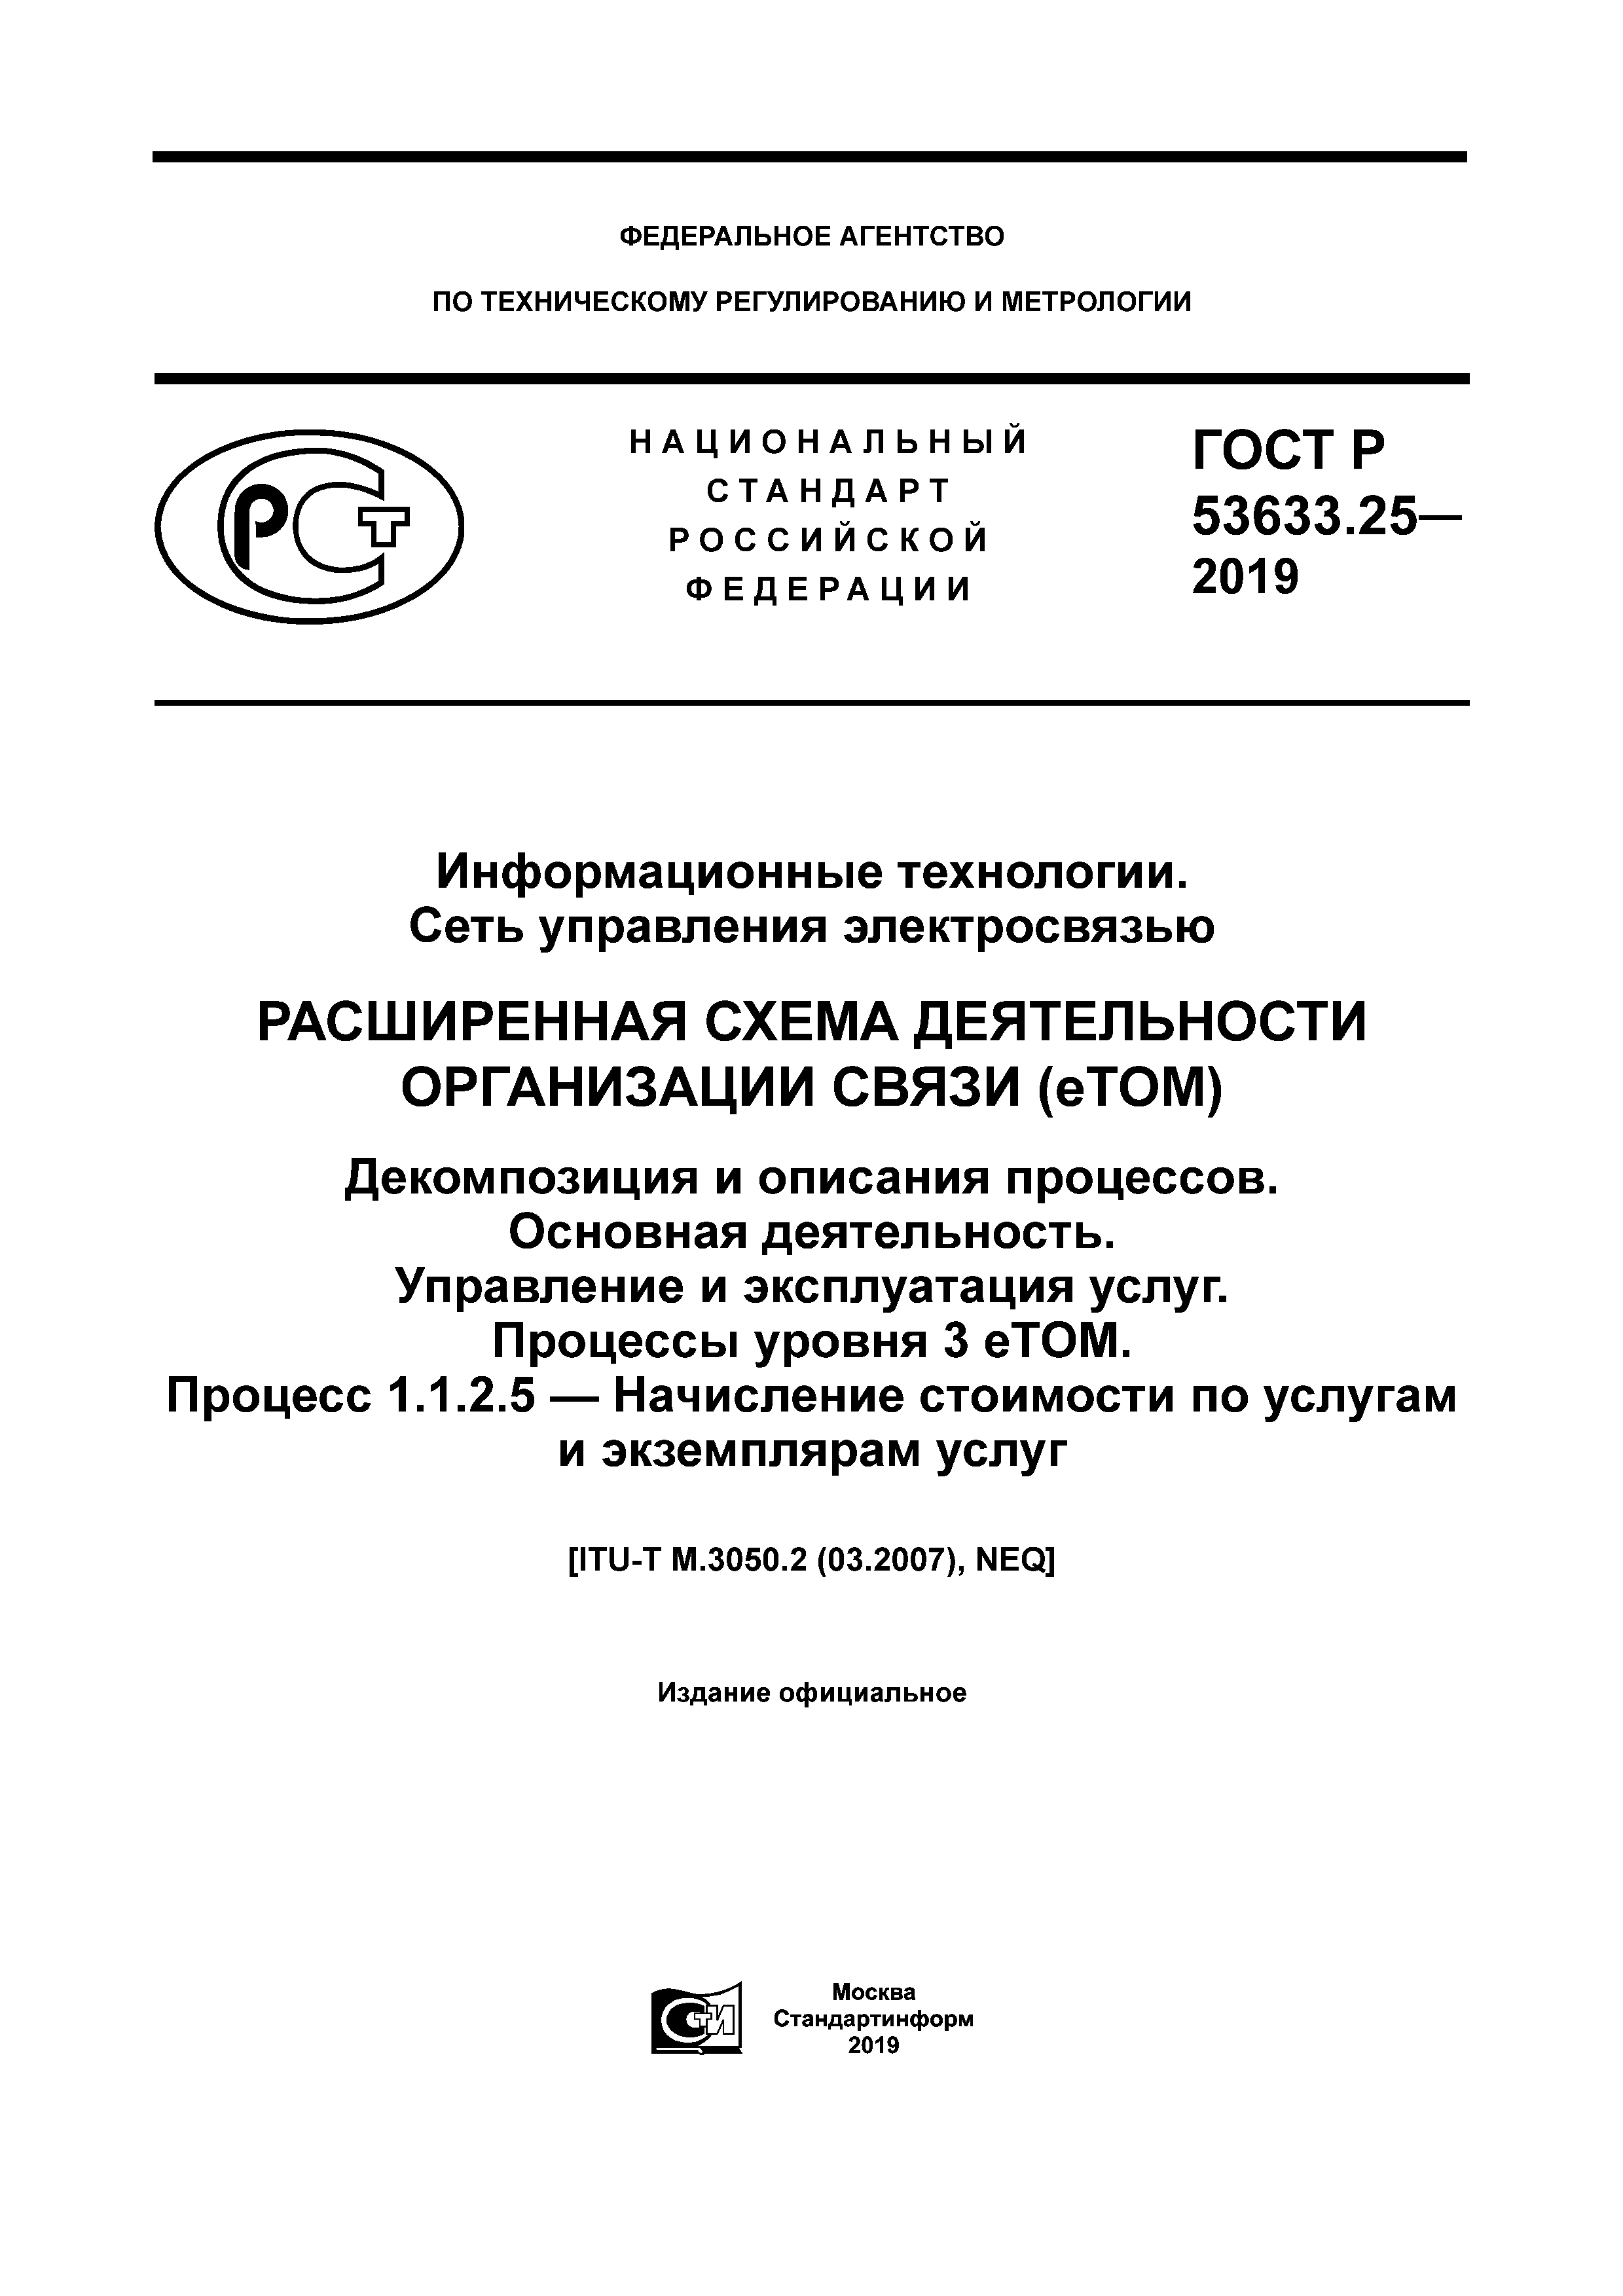 ГОСТ Р 53633.25-2019